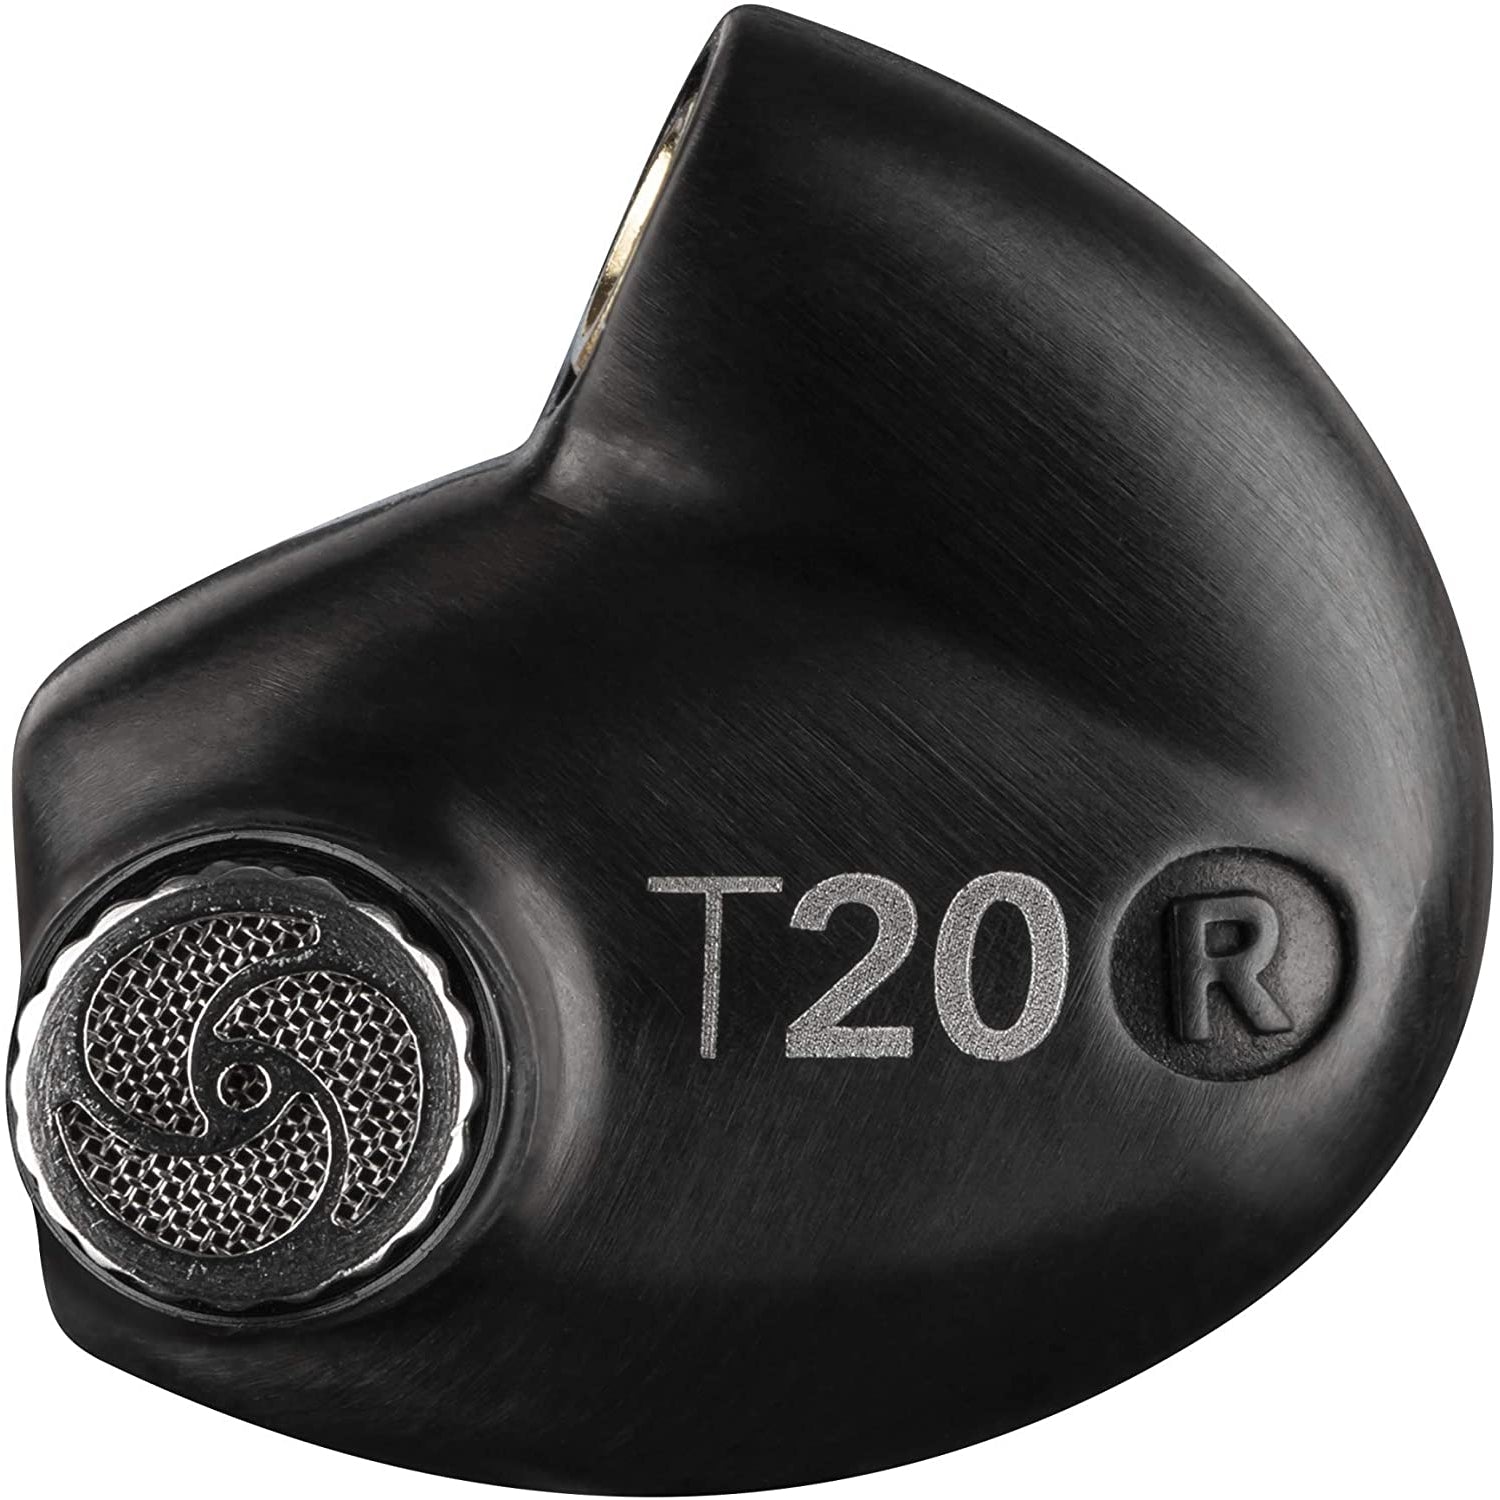 RHA T20 Wireless In-Ear Headphones with Bluetooth Neckband